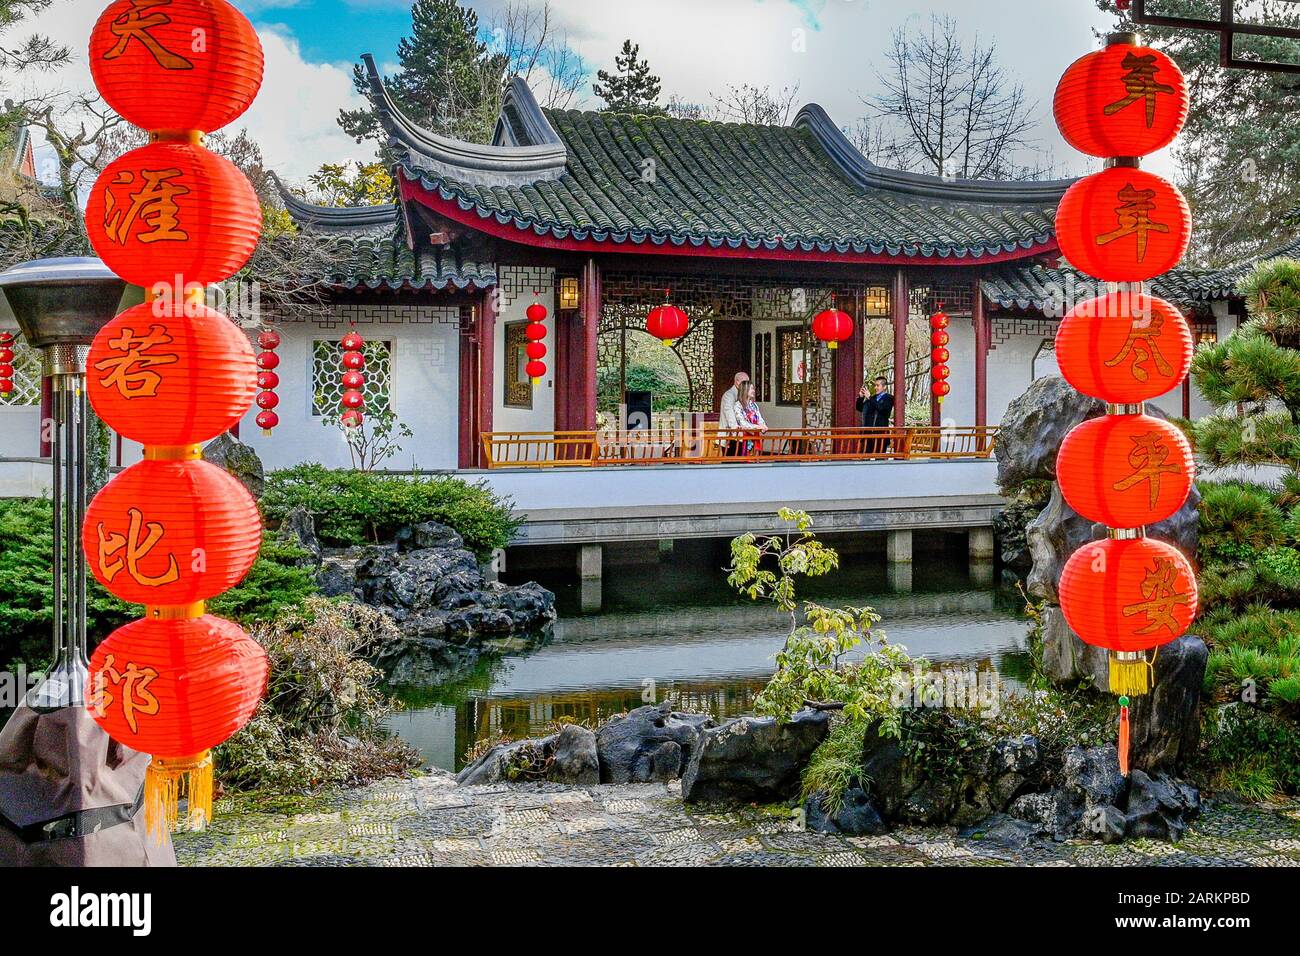 Chinese Red lanterns, Dr Sun-Yat Sen Classical Garden, Chinatown, Vancouver, British Columbia, Canada Stock Photo